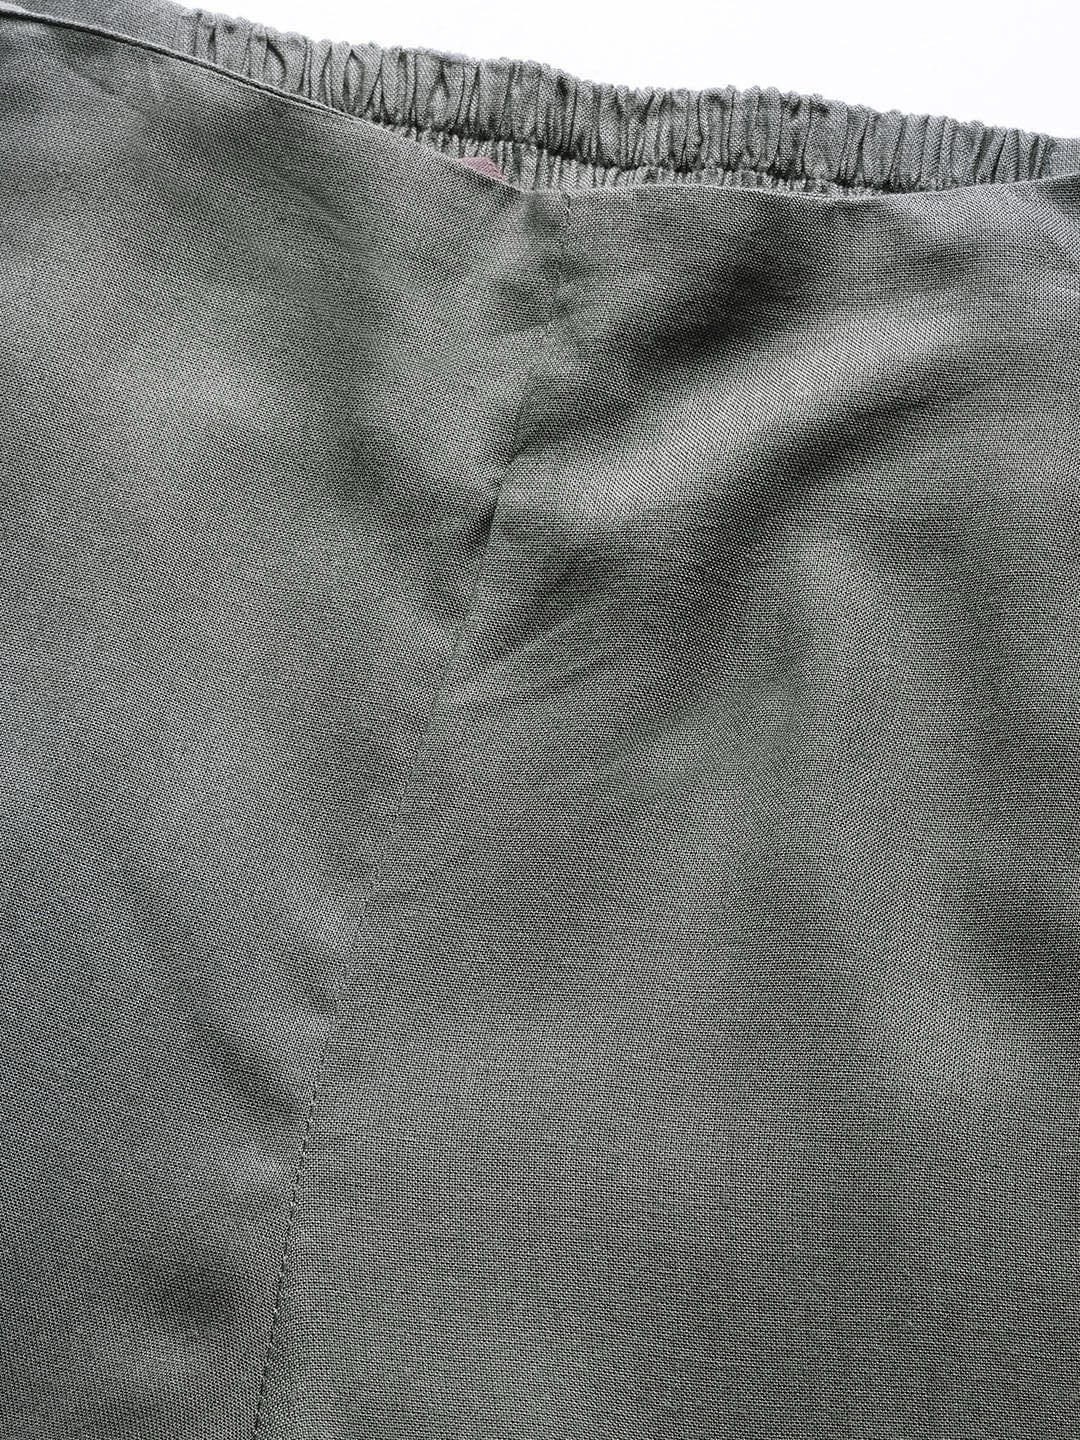 Women's Grey Solid Regular Cropped Trousers - Varanga